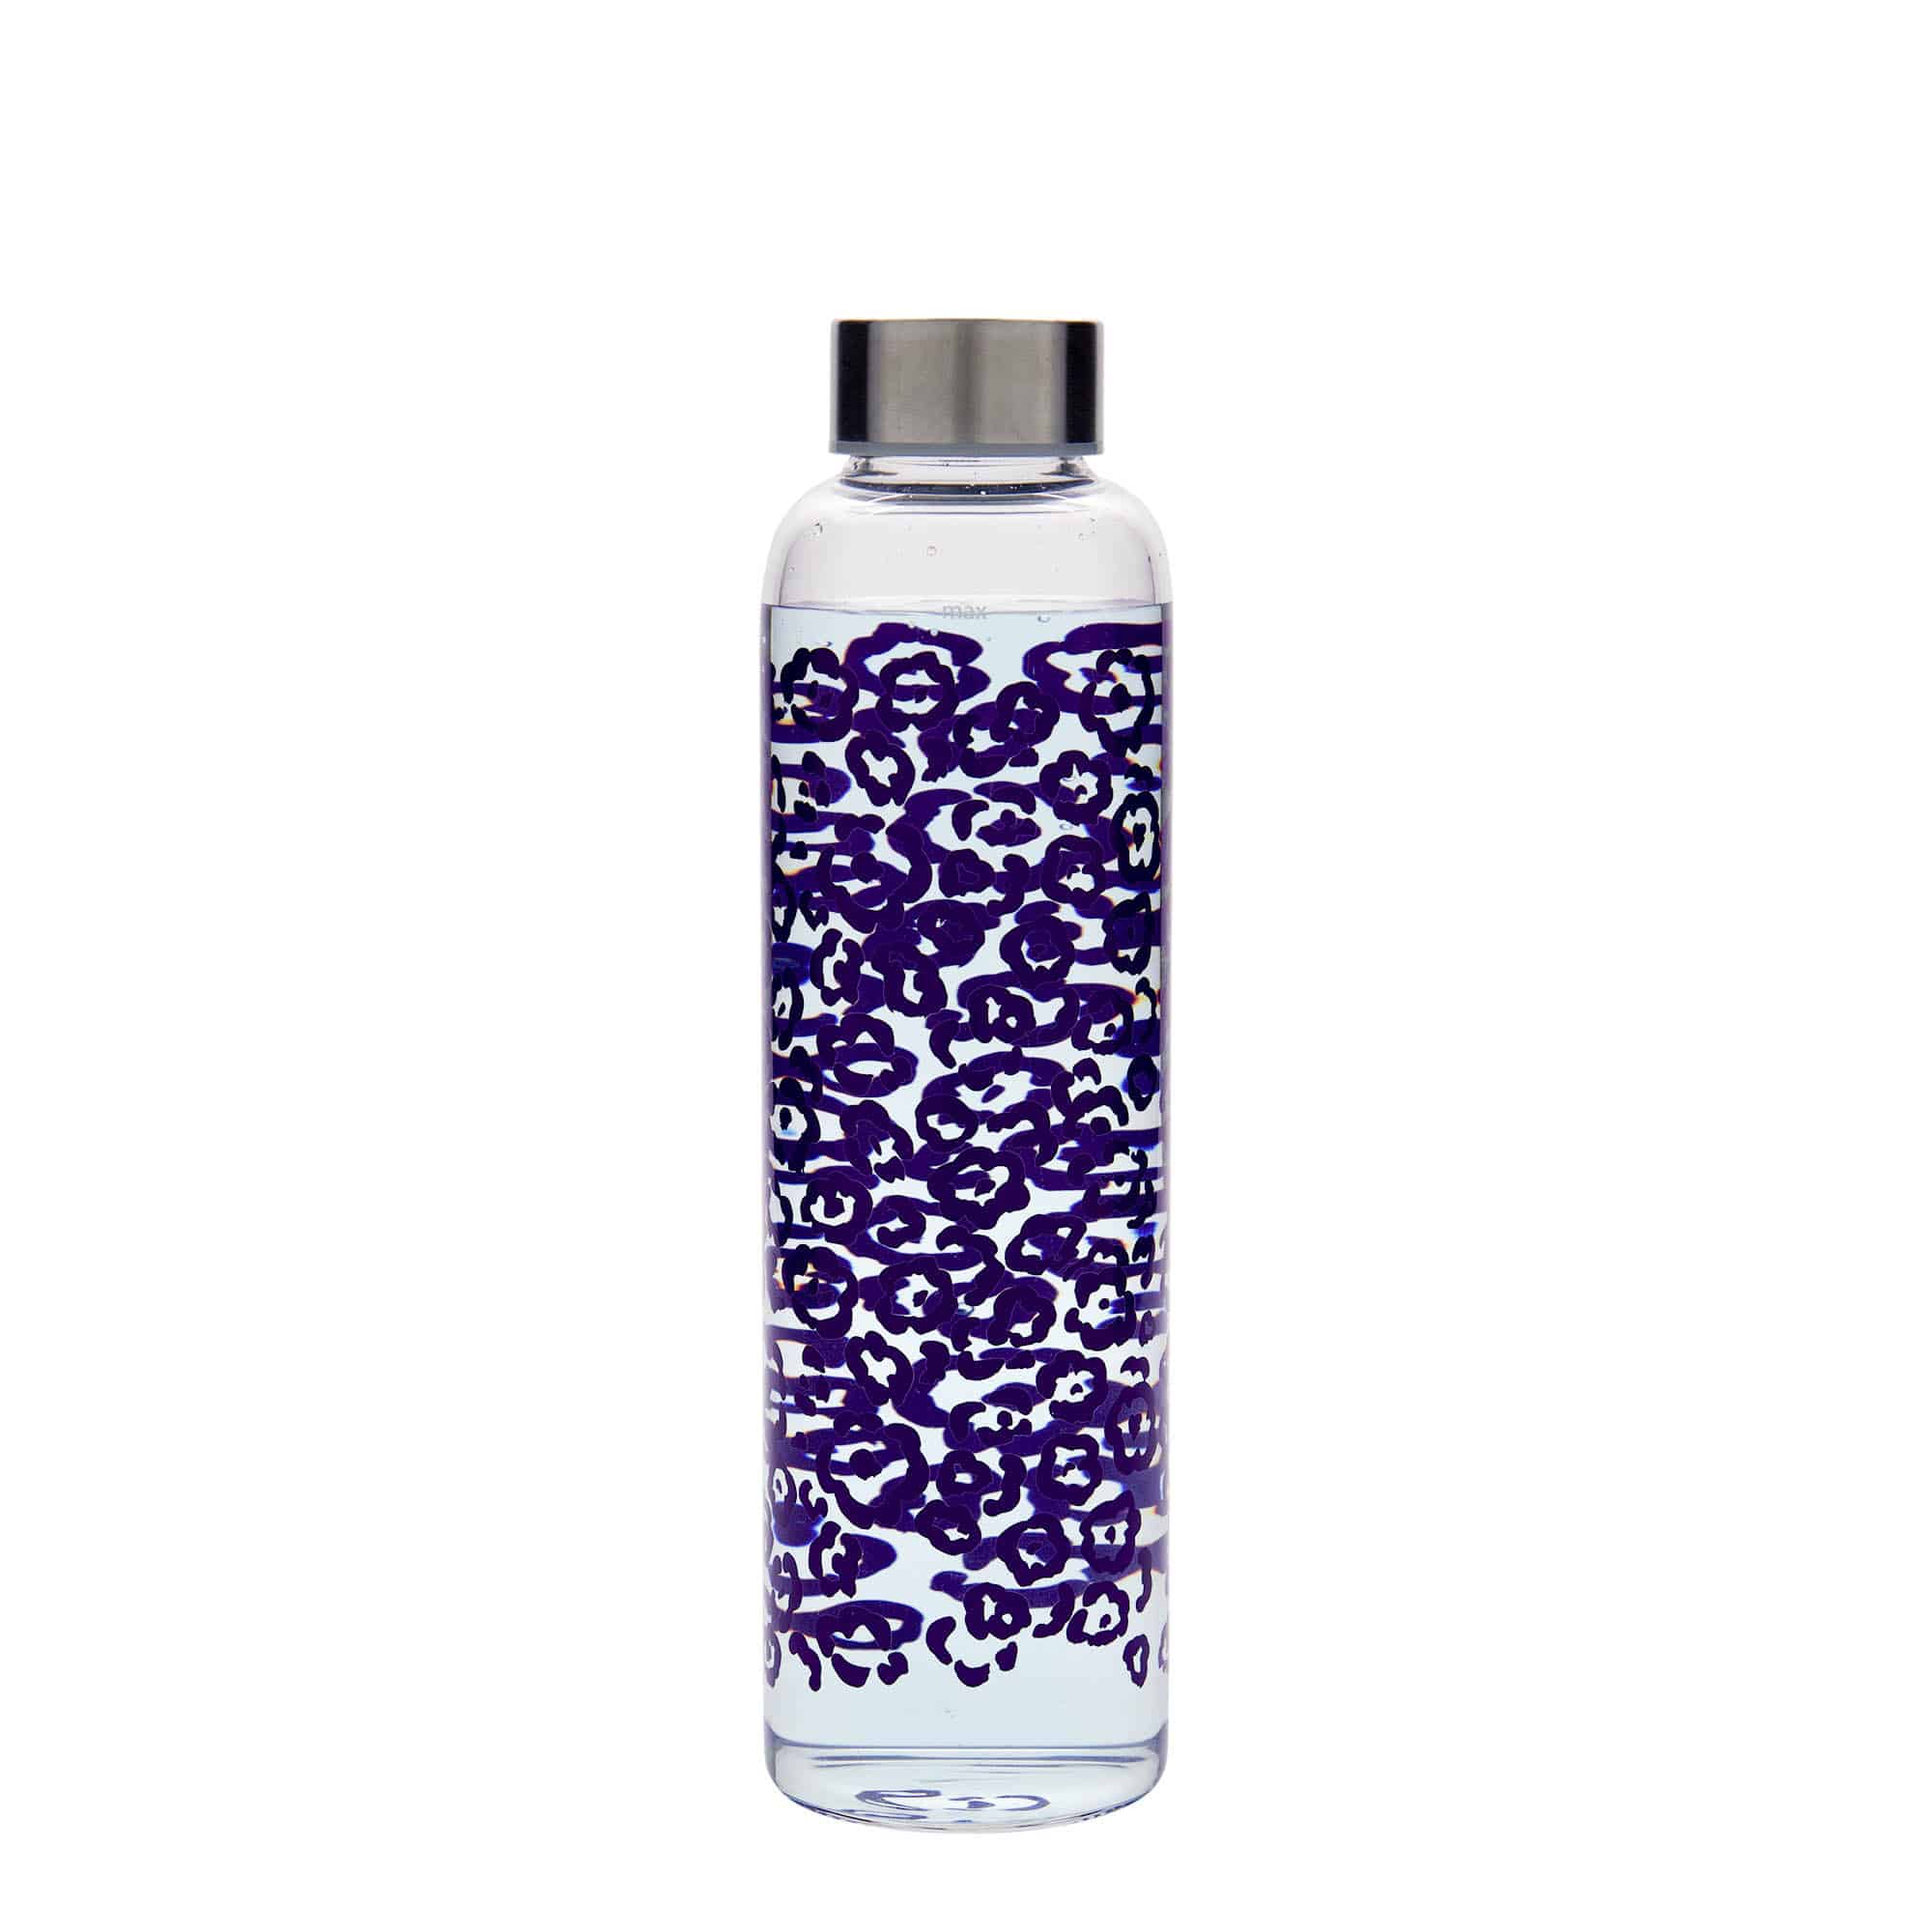 500 ml water bottle 'Perseus', print: purple flowers, closure: screw cap